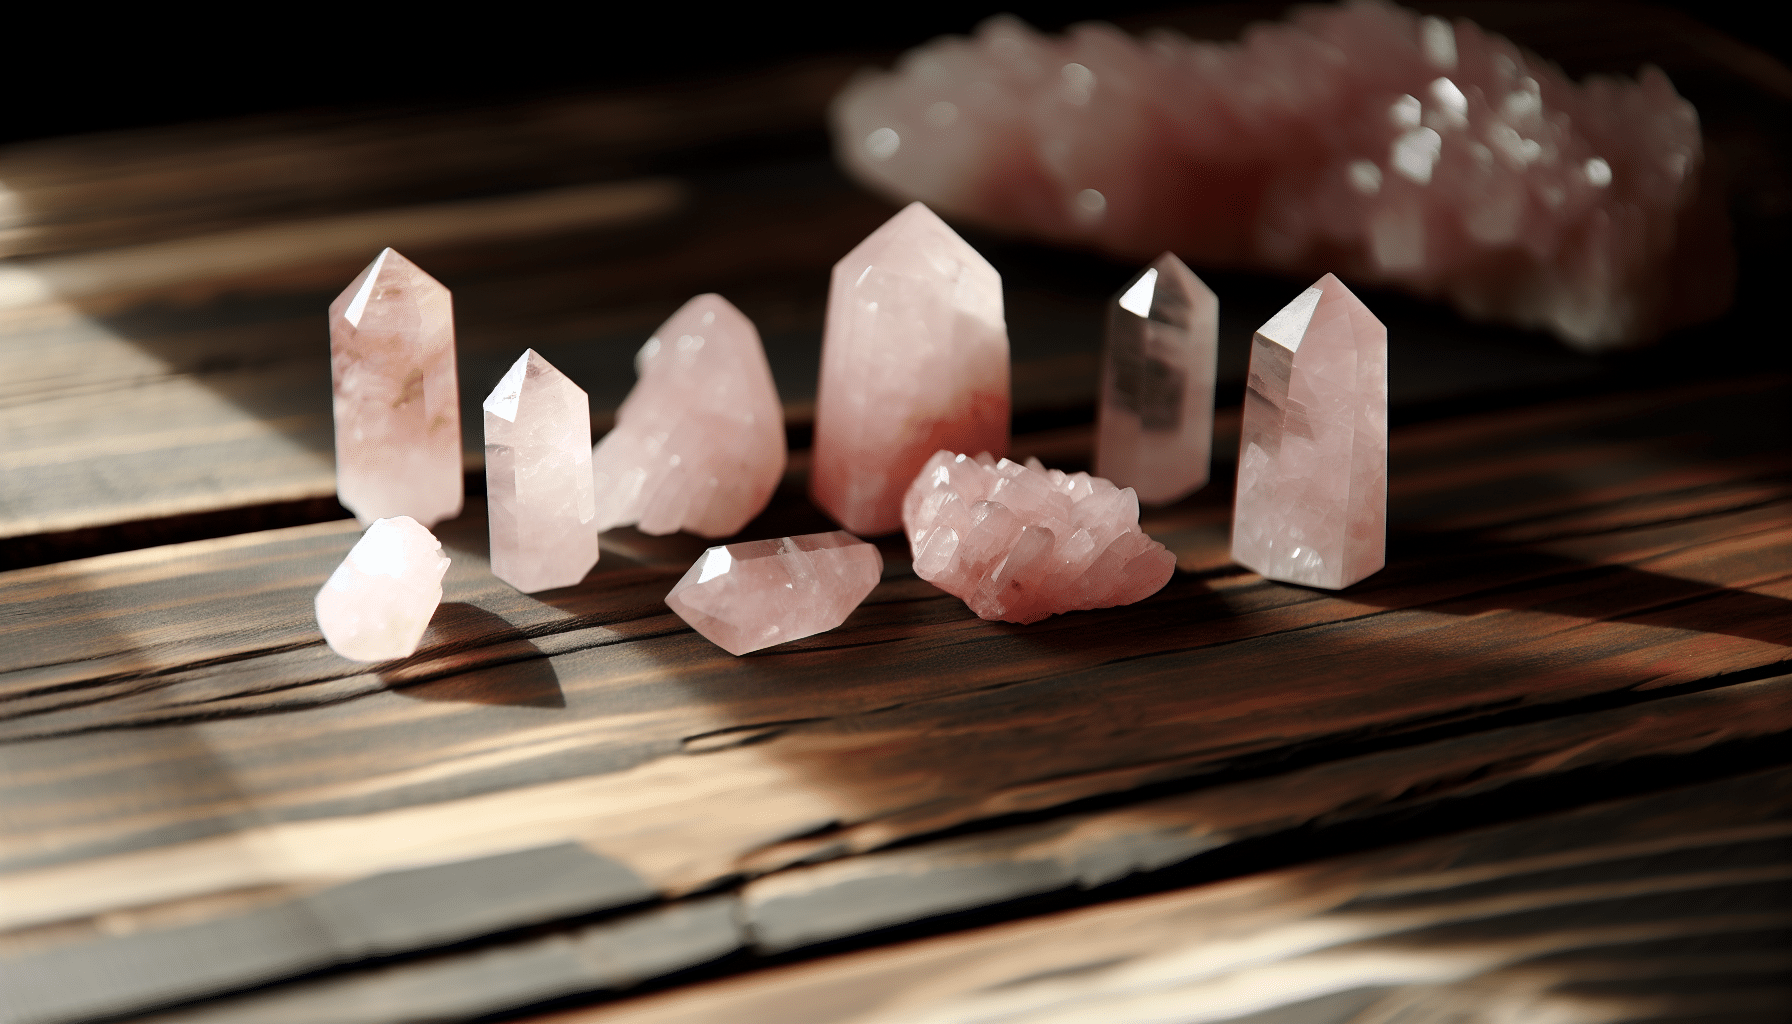 Rose quartz crystals in various shades of pink